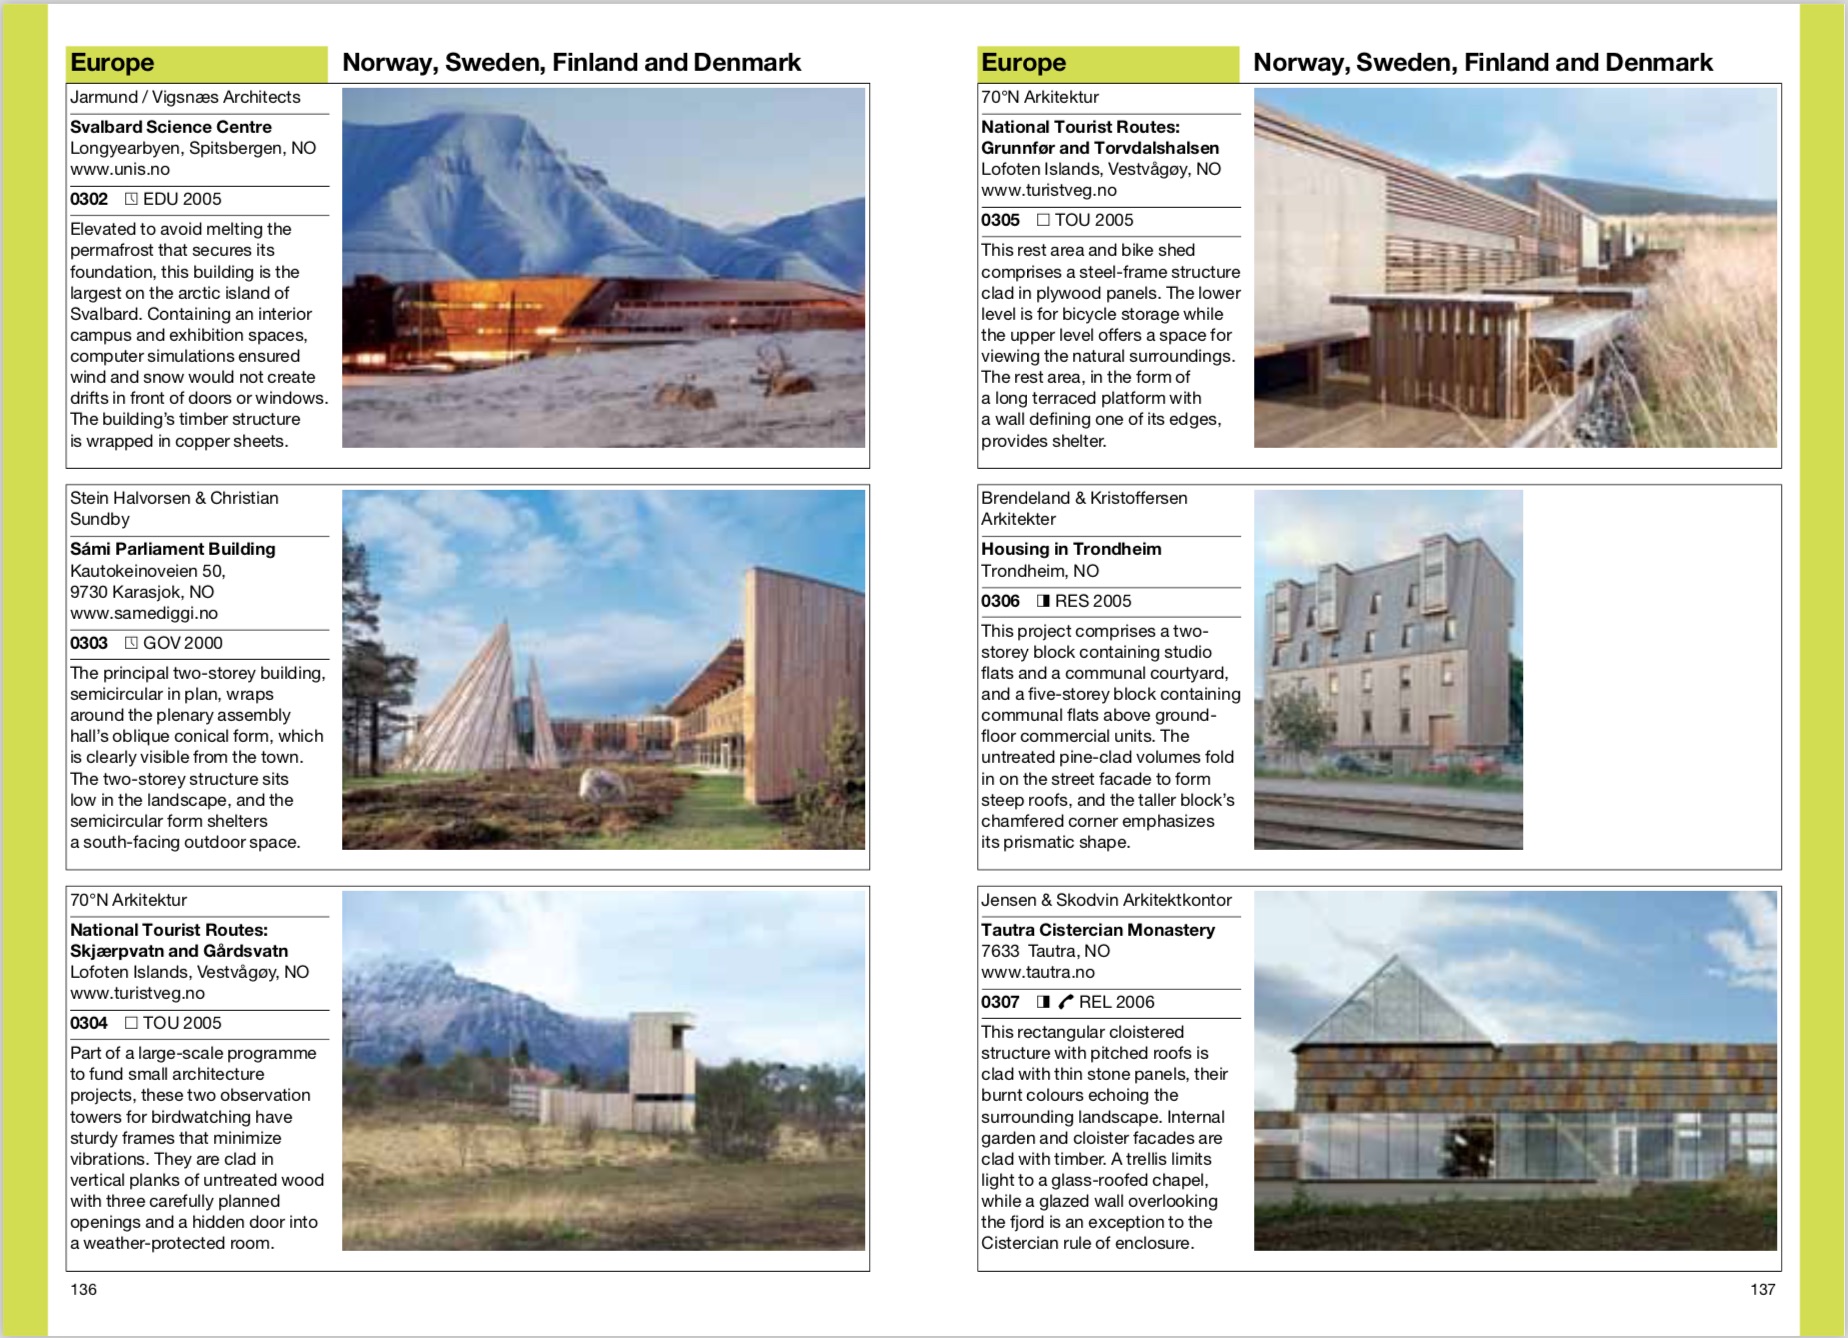 By Phaidon Editors from The Phaidon Atlas of 21st Century World Architecture copyright Phaidon 2011